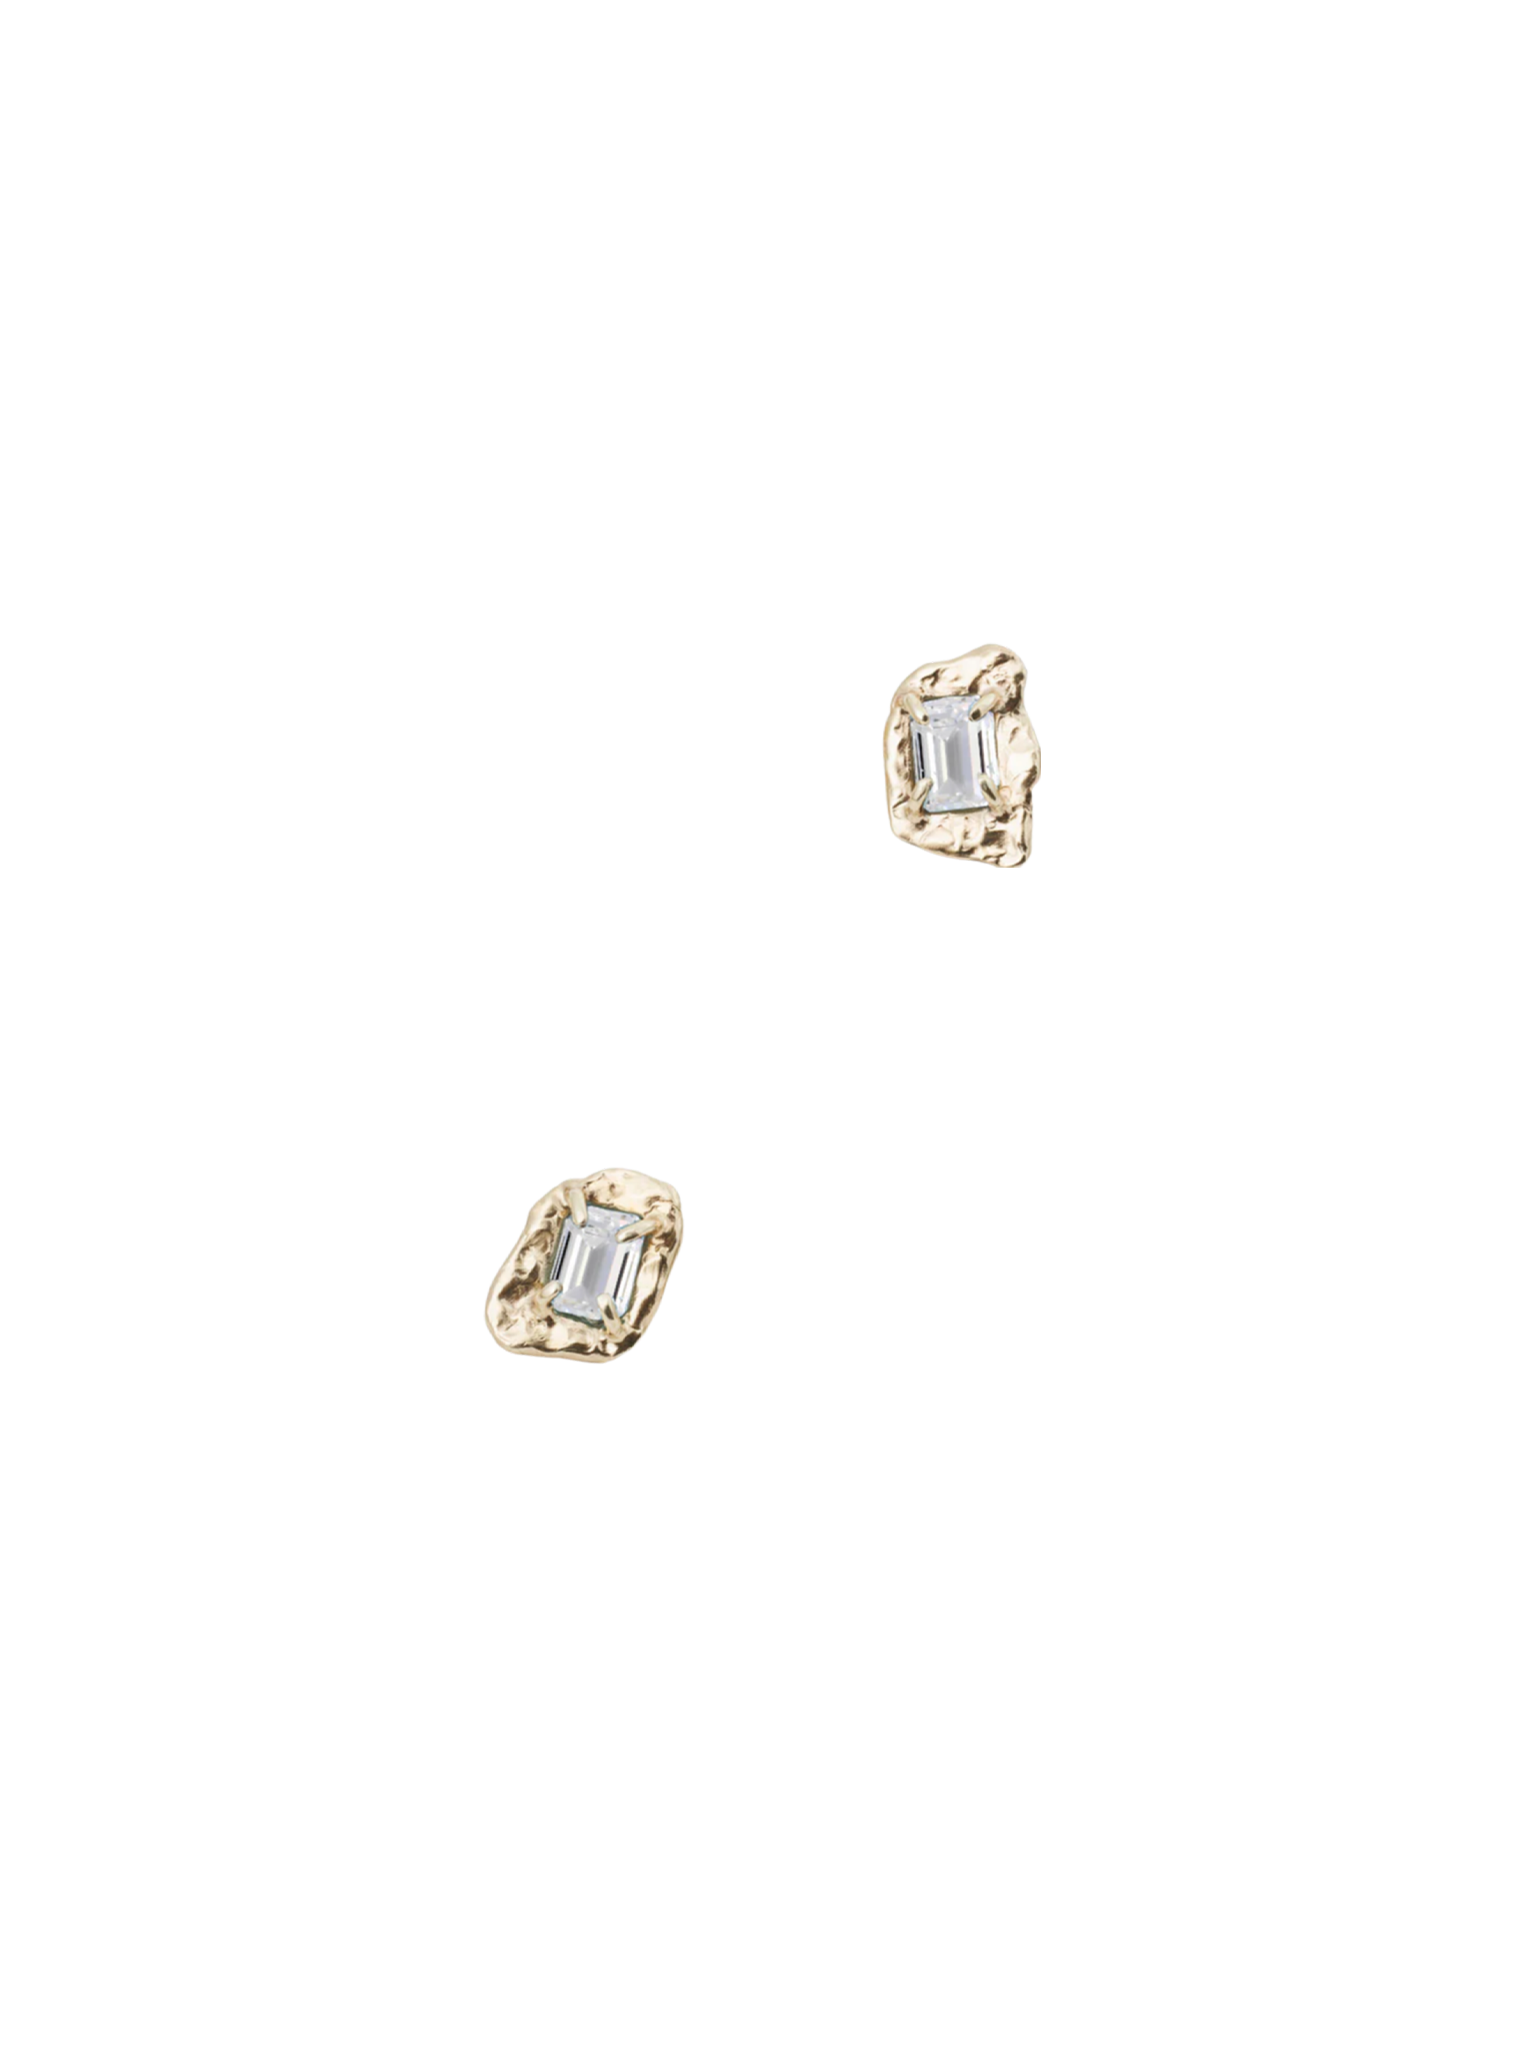 Lolita earrings with diamonds